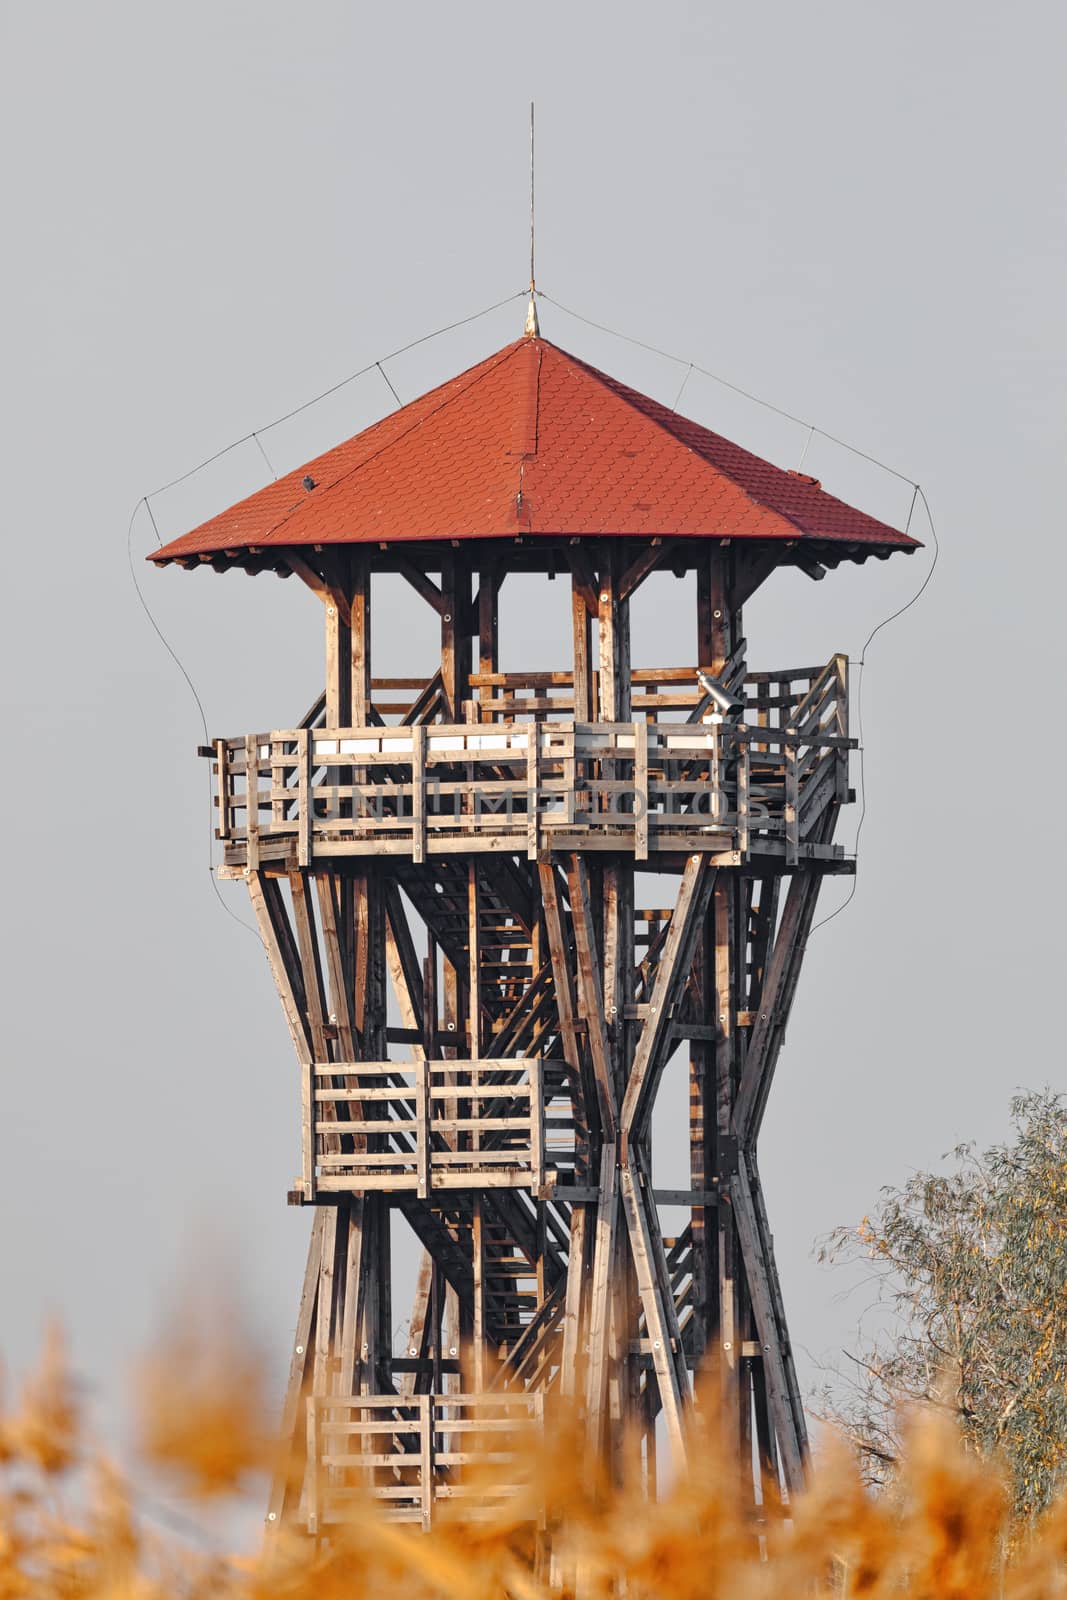 Birdwatching observation tower, Hungary Hortobagy by artush